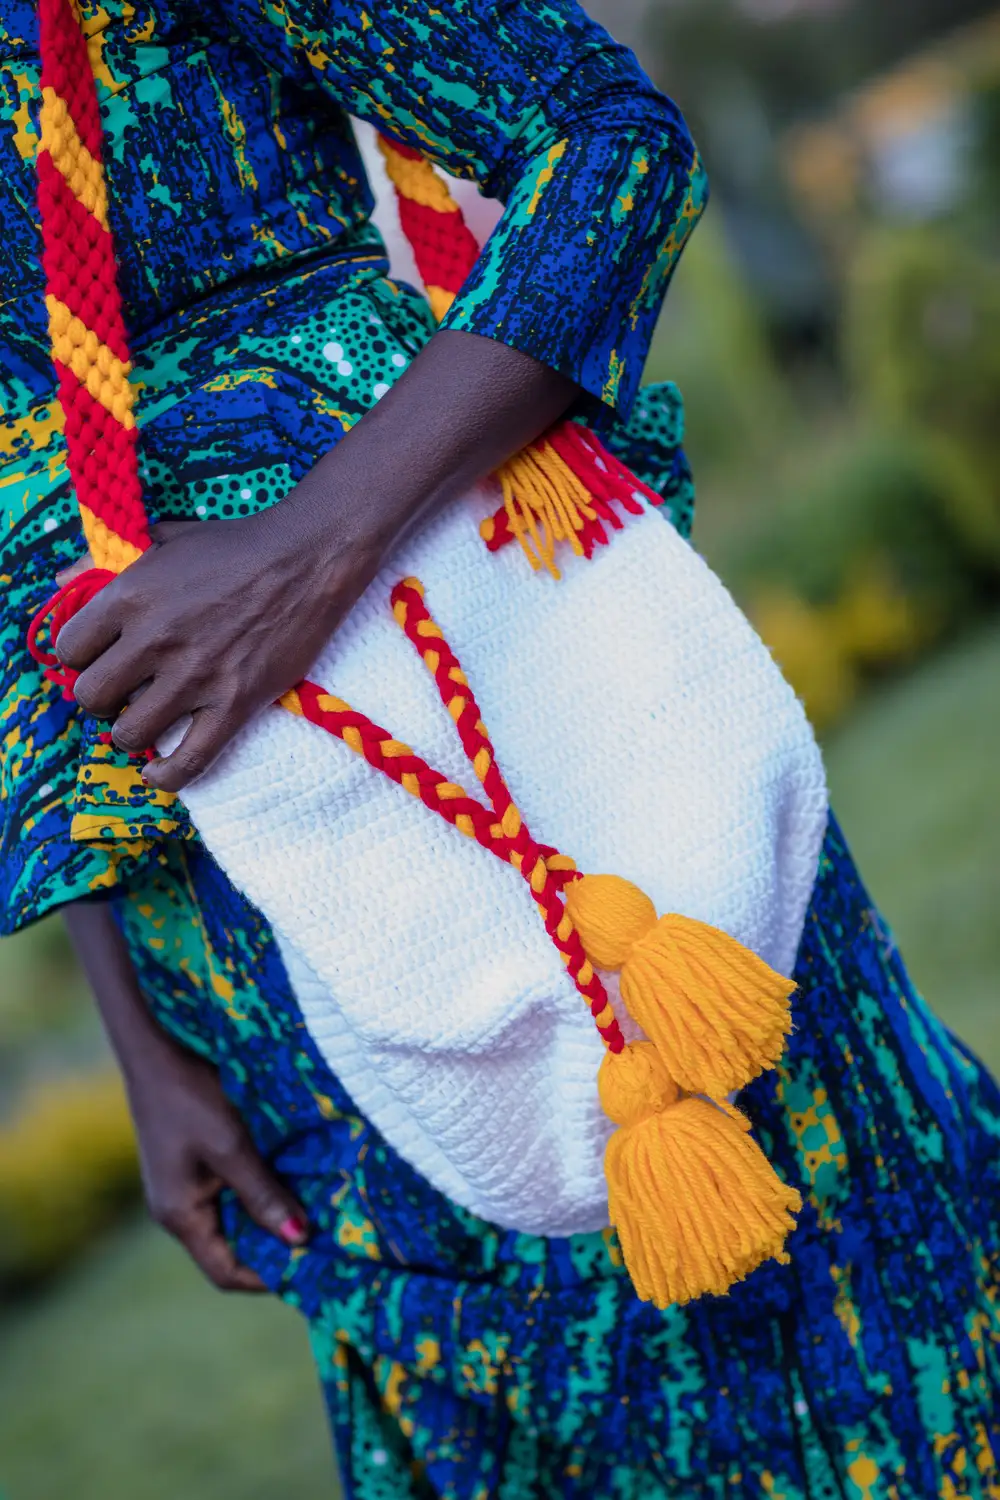 Woman carrying a hand made crochet bag